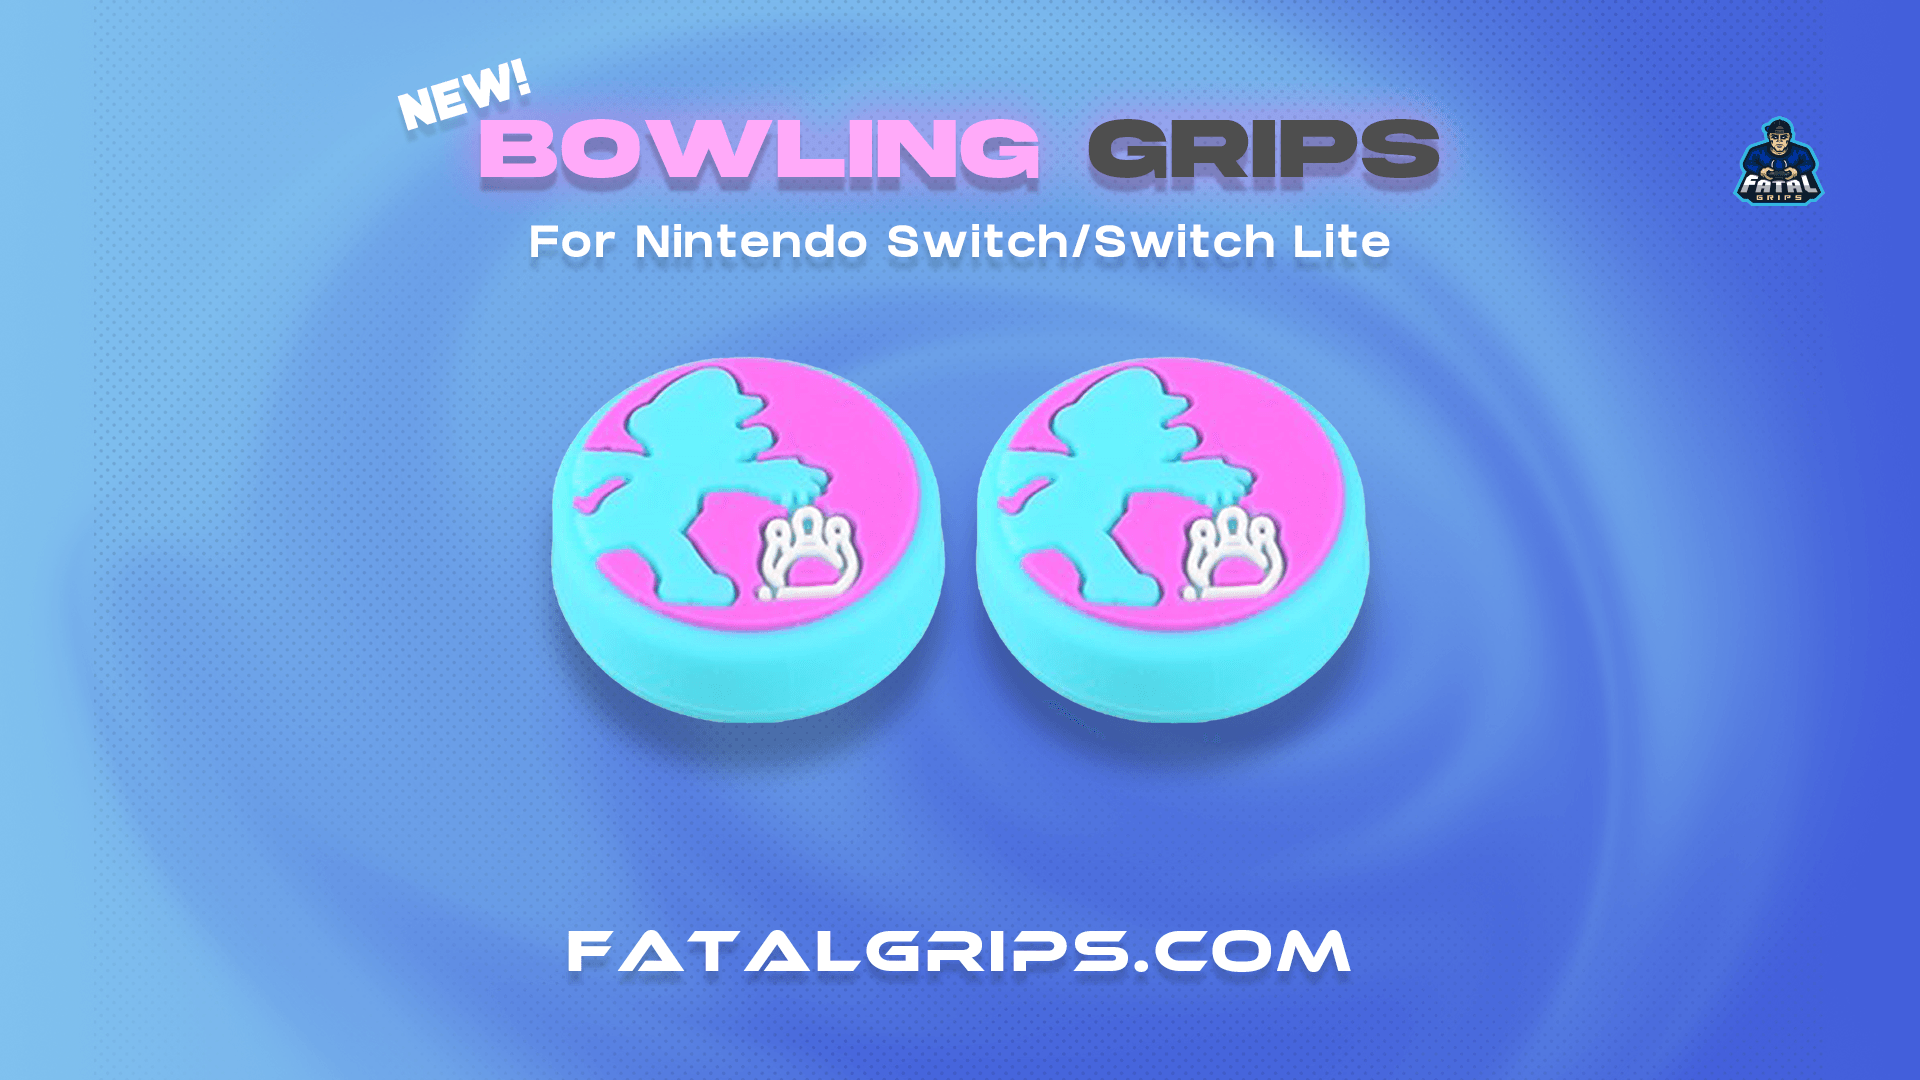 Bowling Grips - Fatal Grips